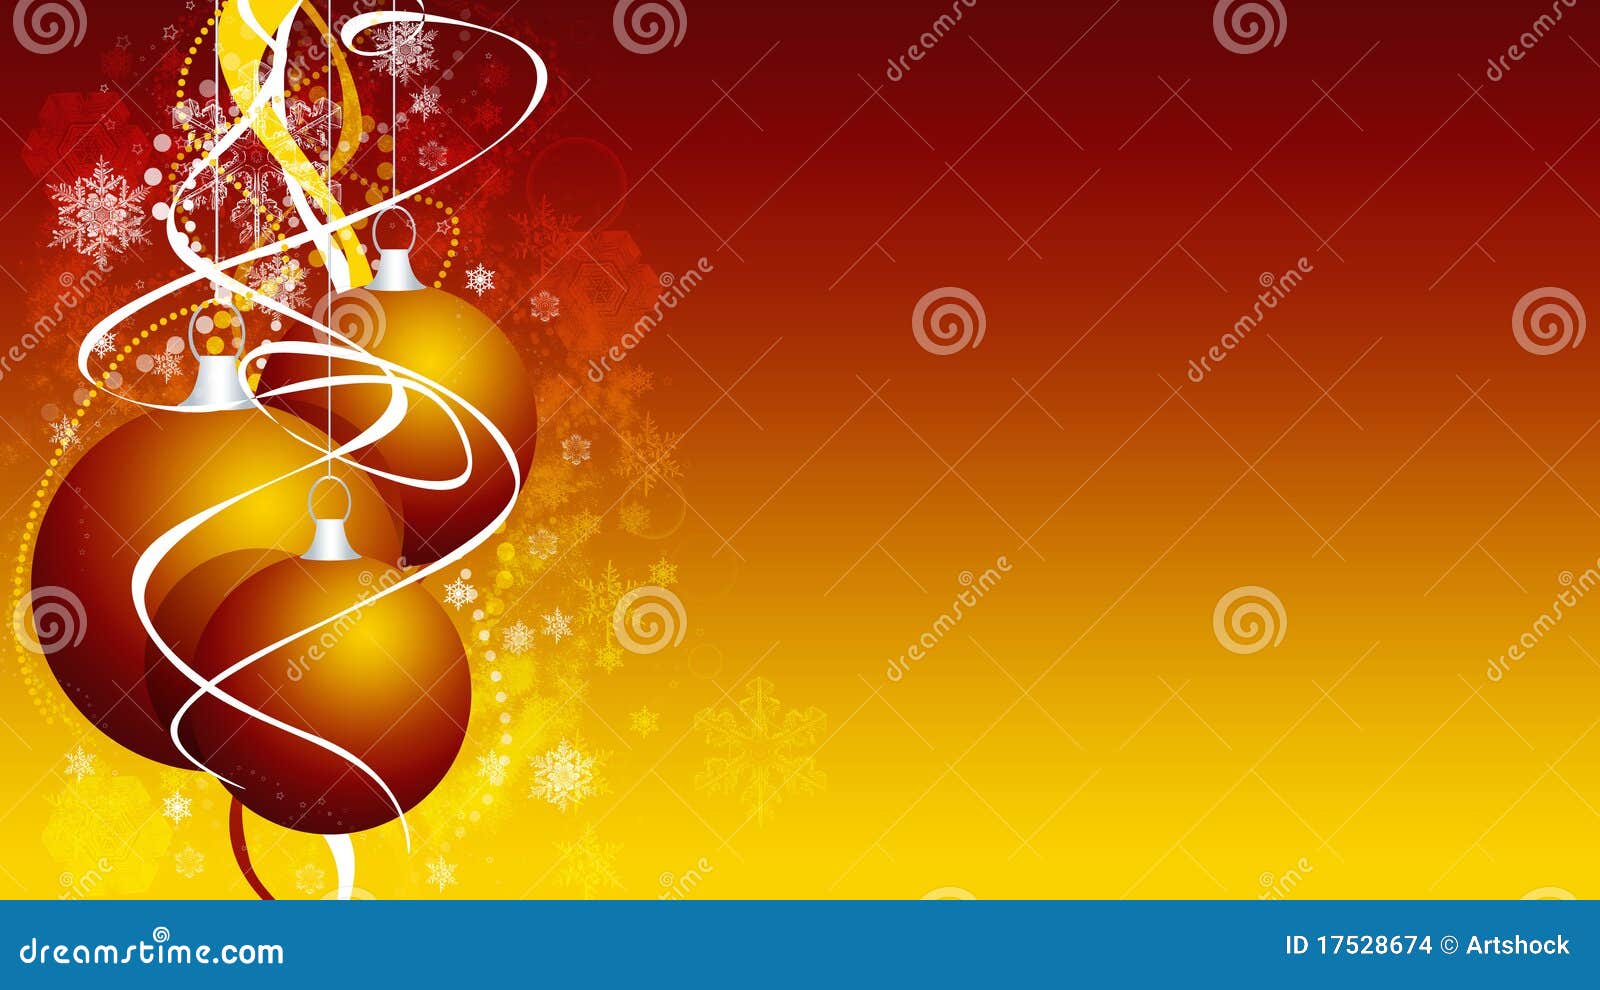 Orange Christmas balls stock illustration. Image of 